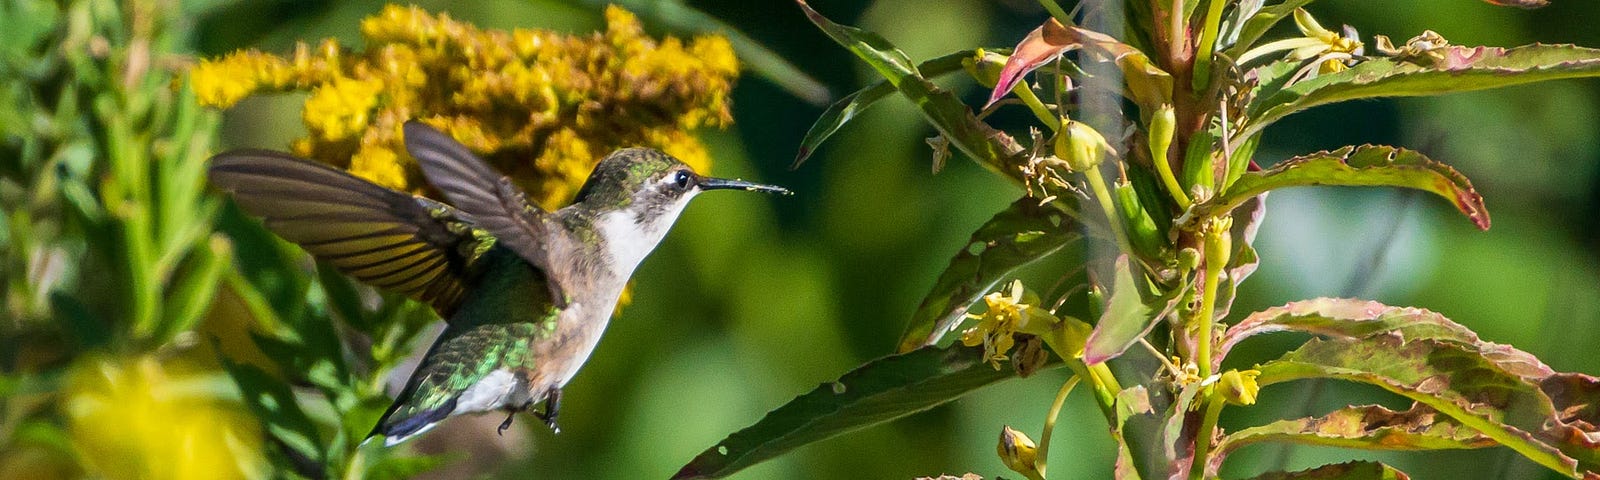 Ruby-throated hummingbird preparing to slurp nectar from a yellow flower.